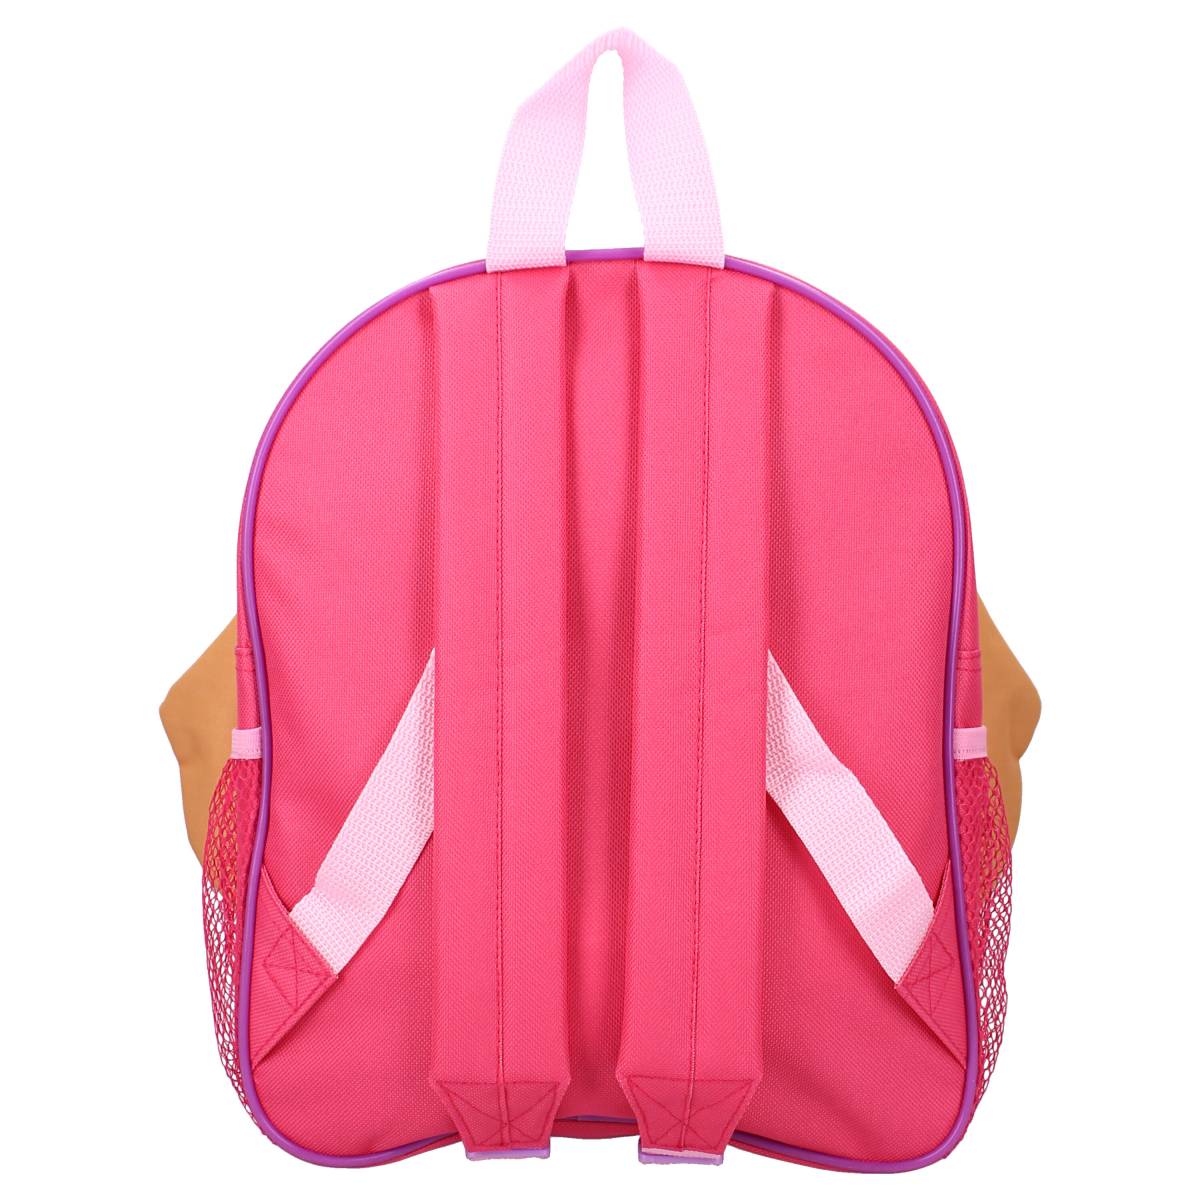 min lærer bungee jump Paw Patrol Fluffy Friends 3D Backpack Pink